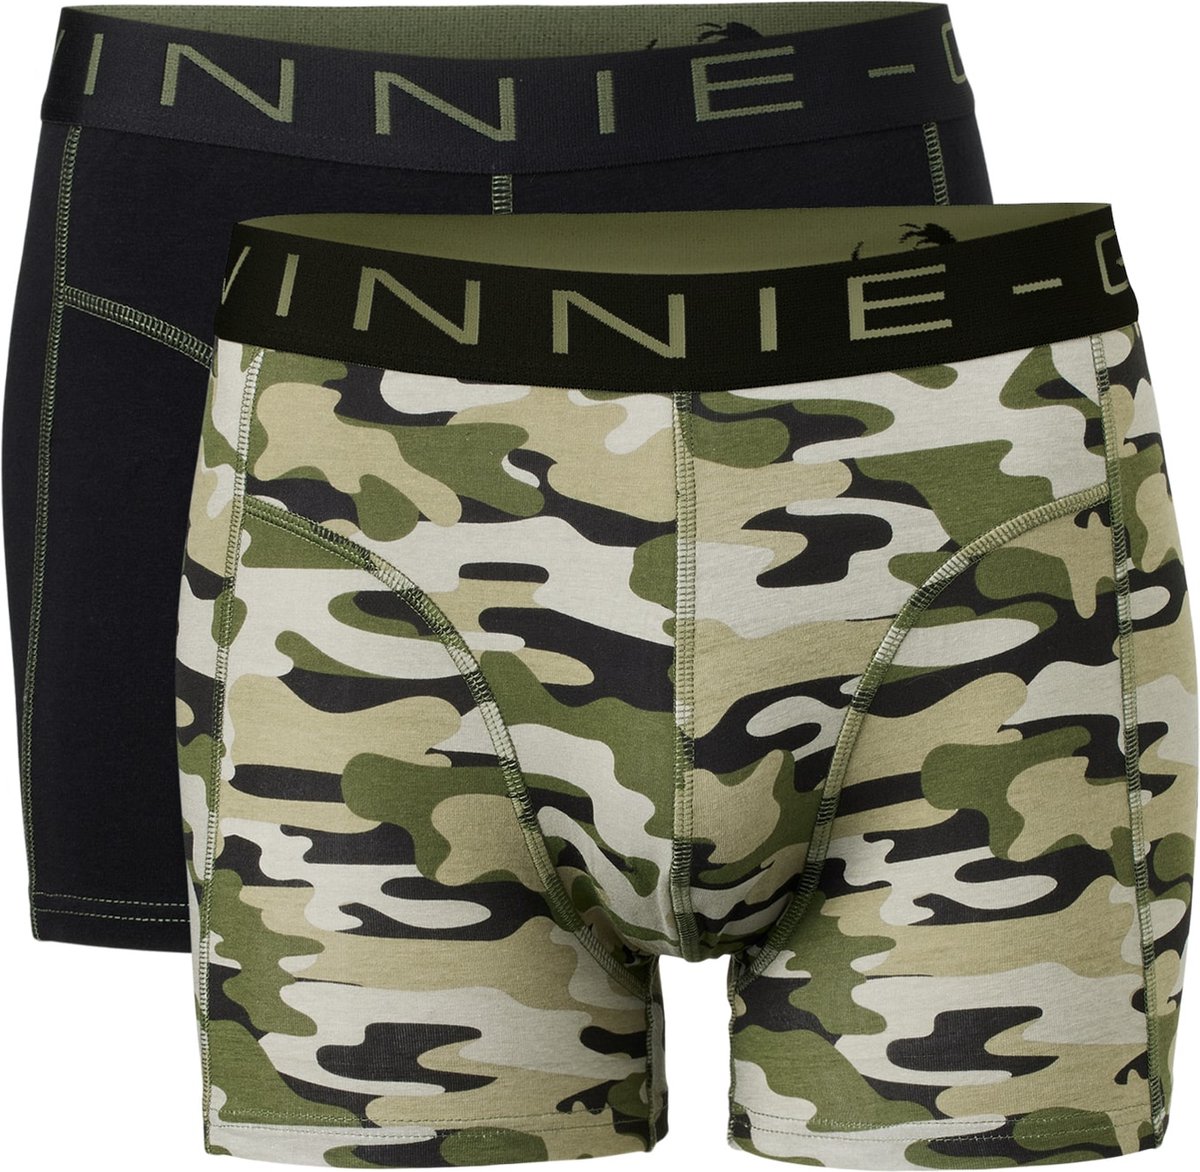 Vinnie-G Boxershorts 2-pack Black/Army Green Print - Maat L - Heren Onderbroeken Zwart/Legerprint- Geen irritante Labels - Katoen heren ondergoed